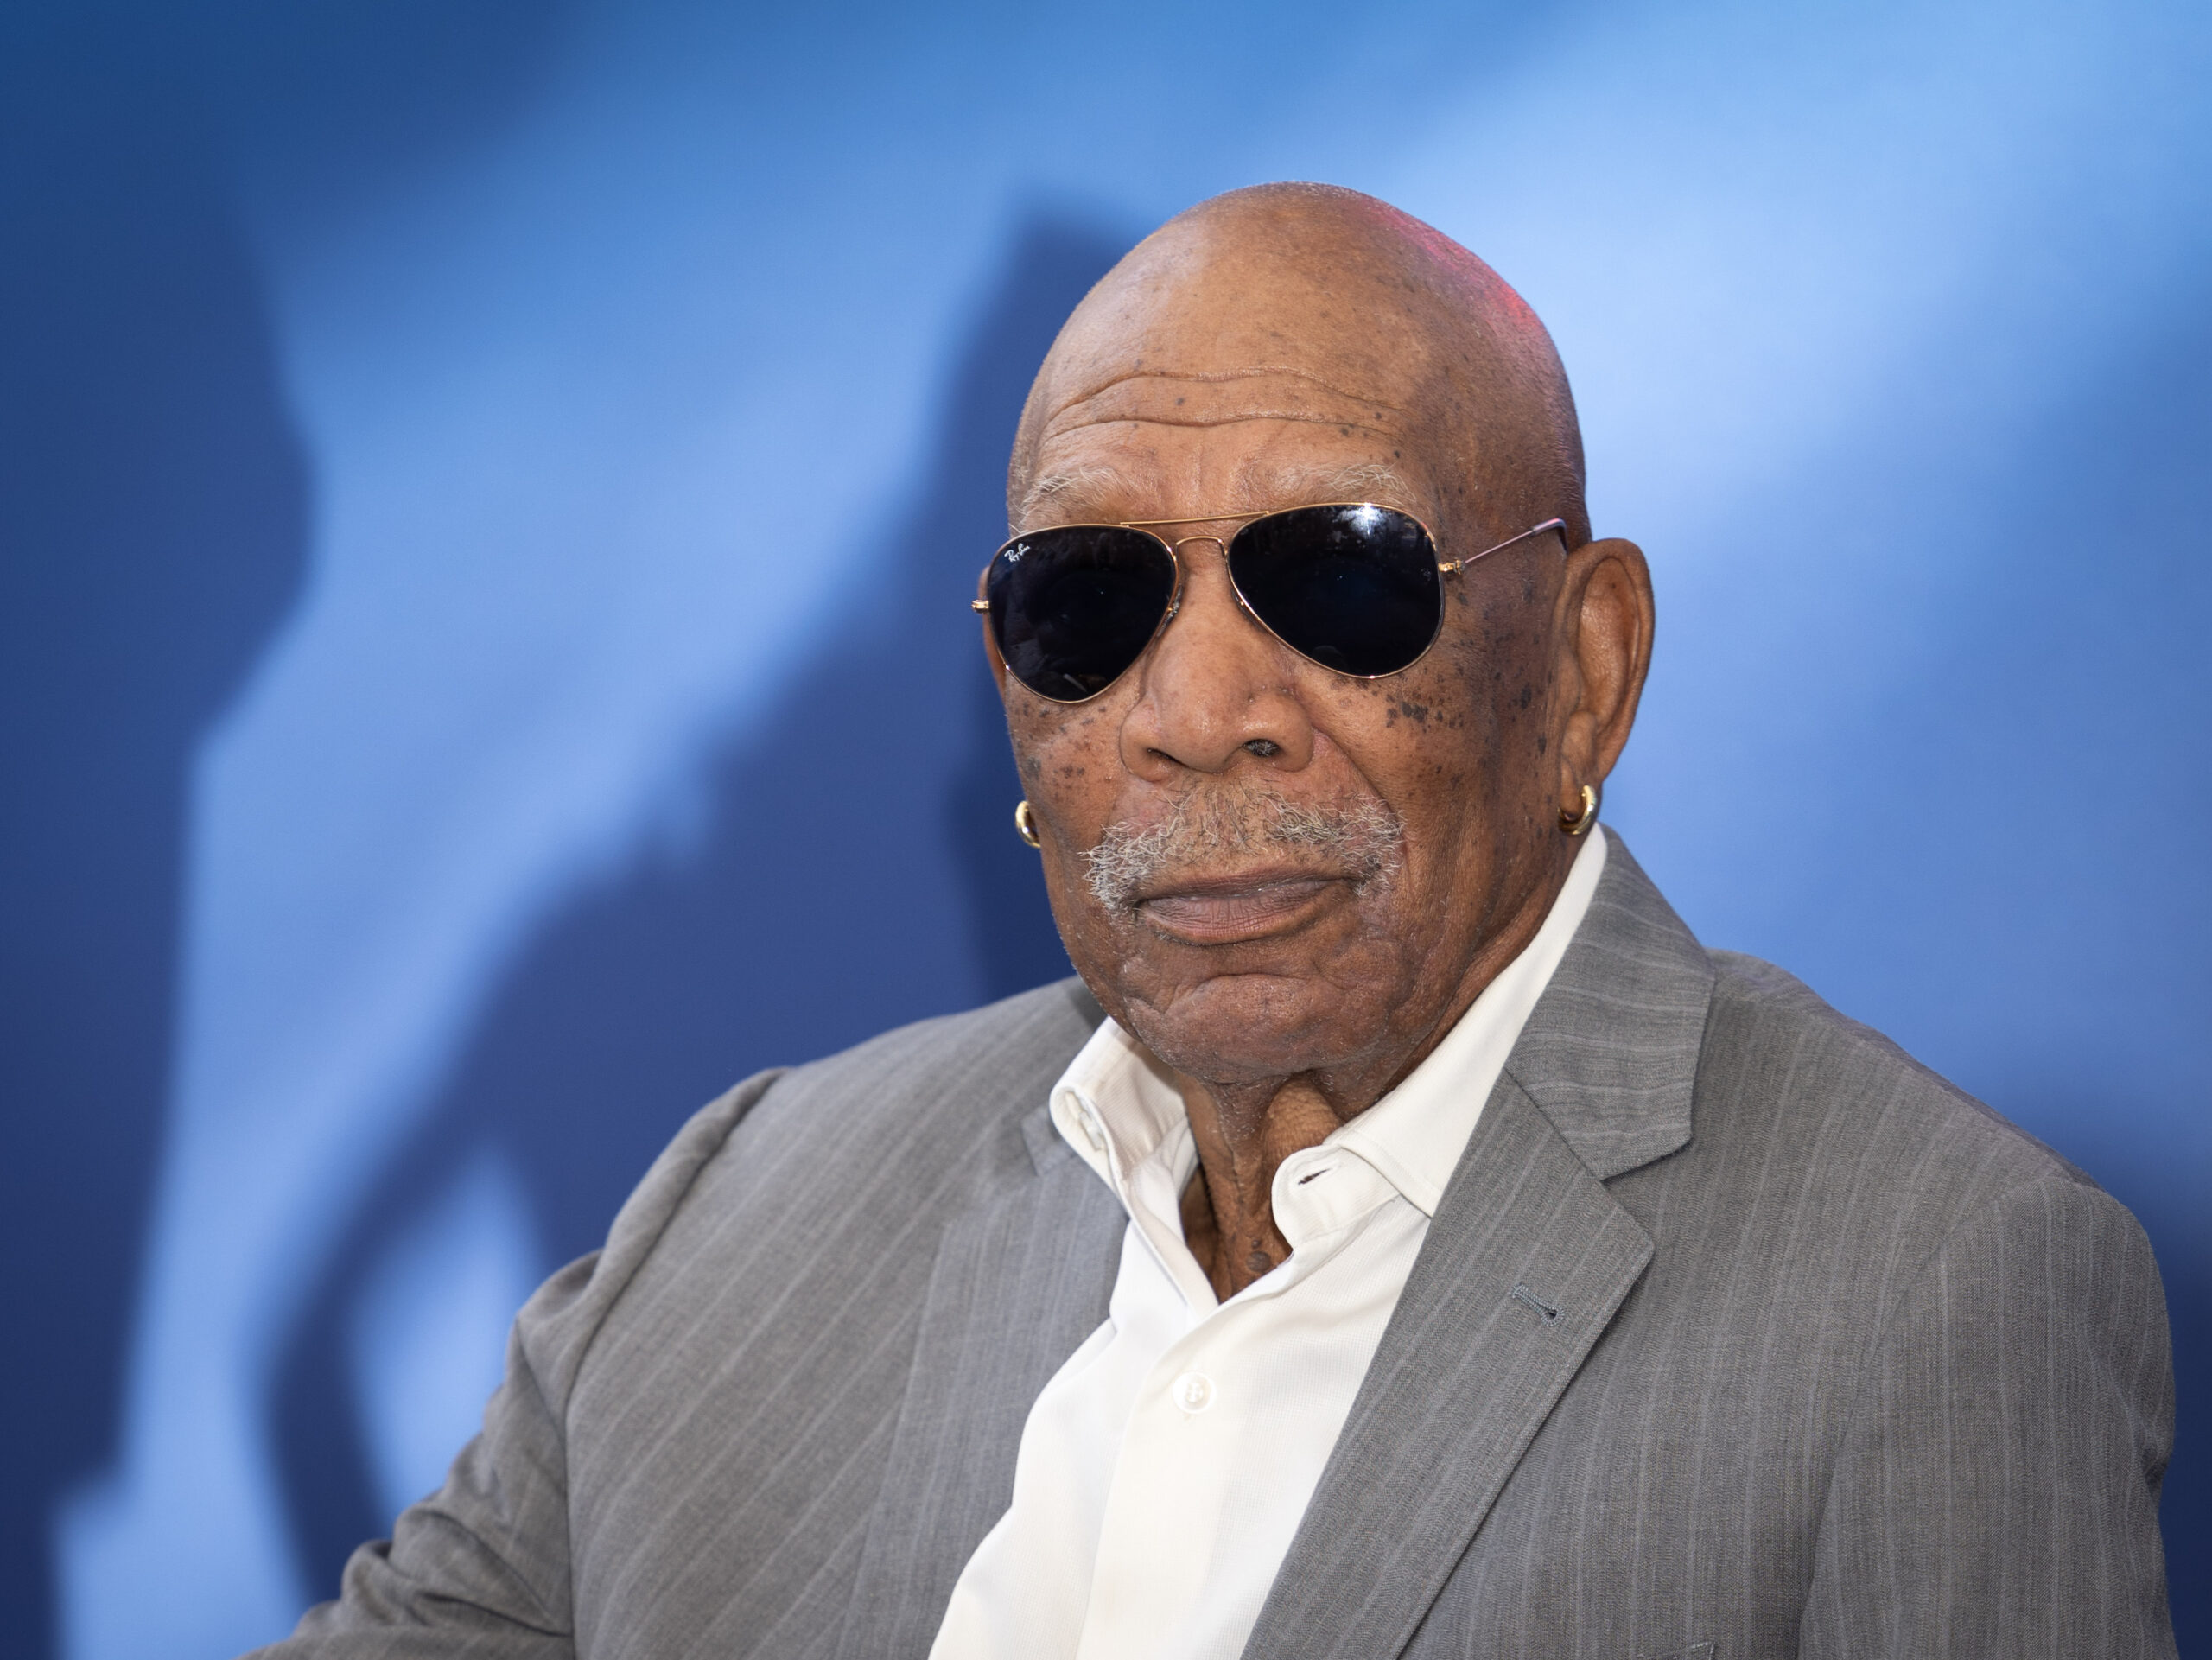 Morgan Freeman Criticizes Black History Month: “I Detest It